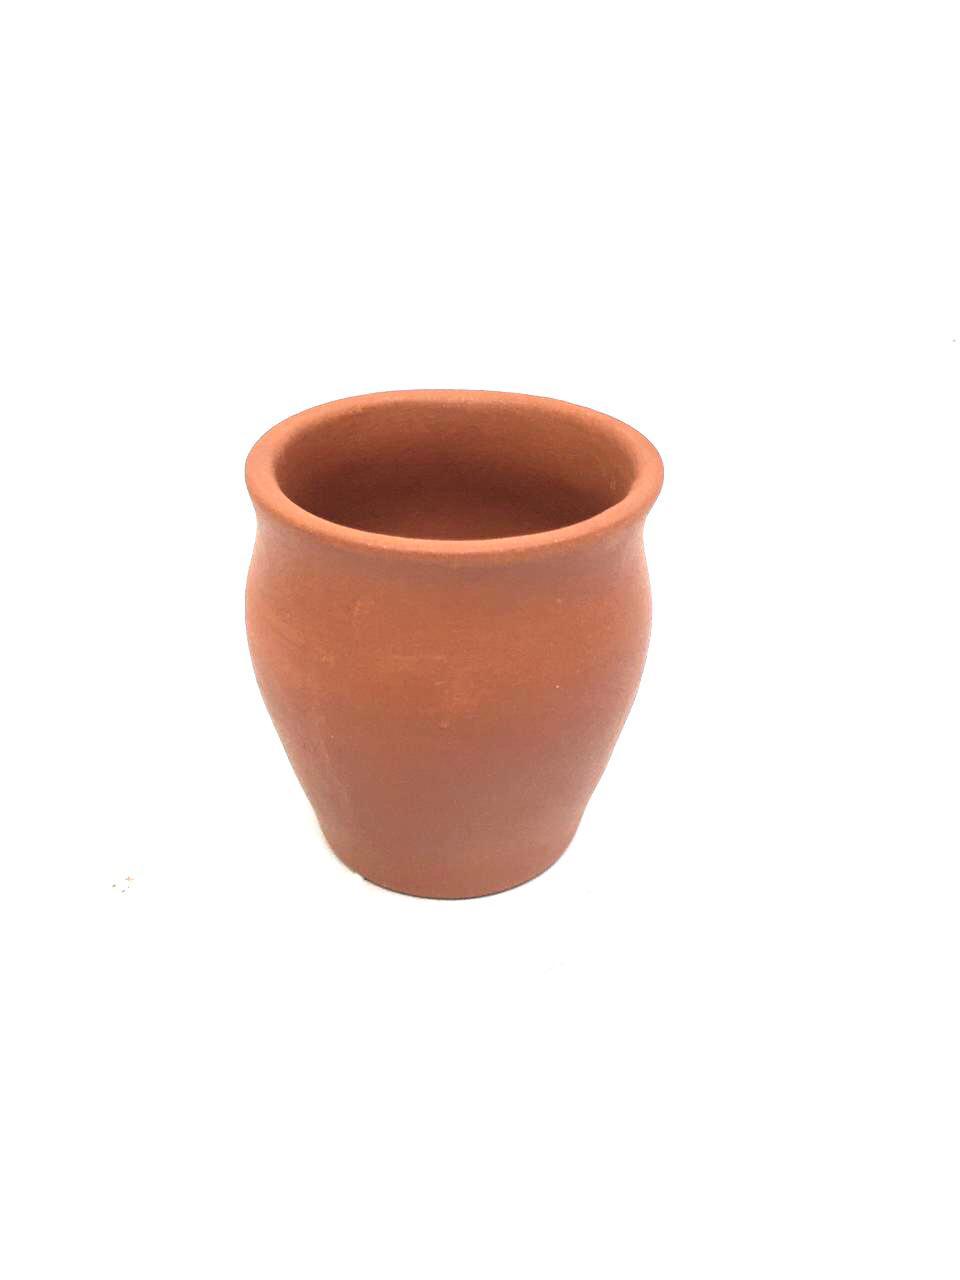 Standard Terracotta Kulhads In Plain & Glazed Set Of 6 Earthenware Tamrapatra